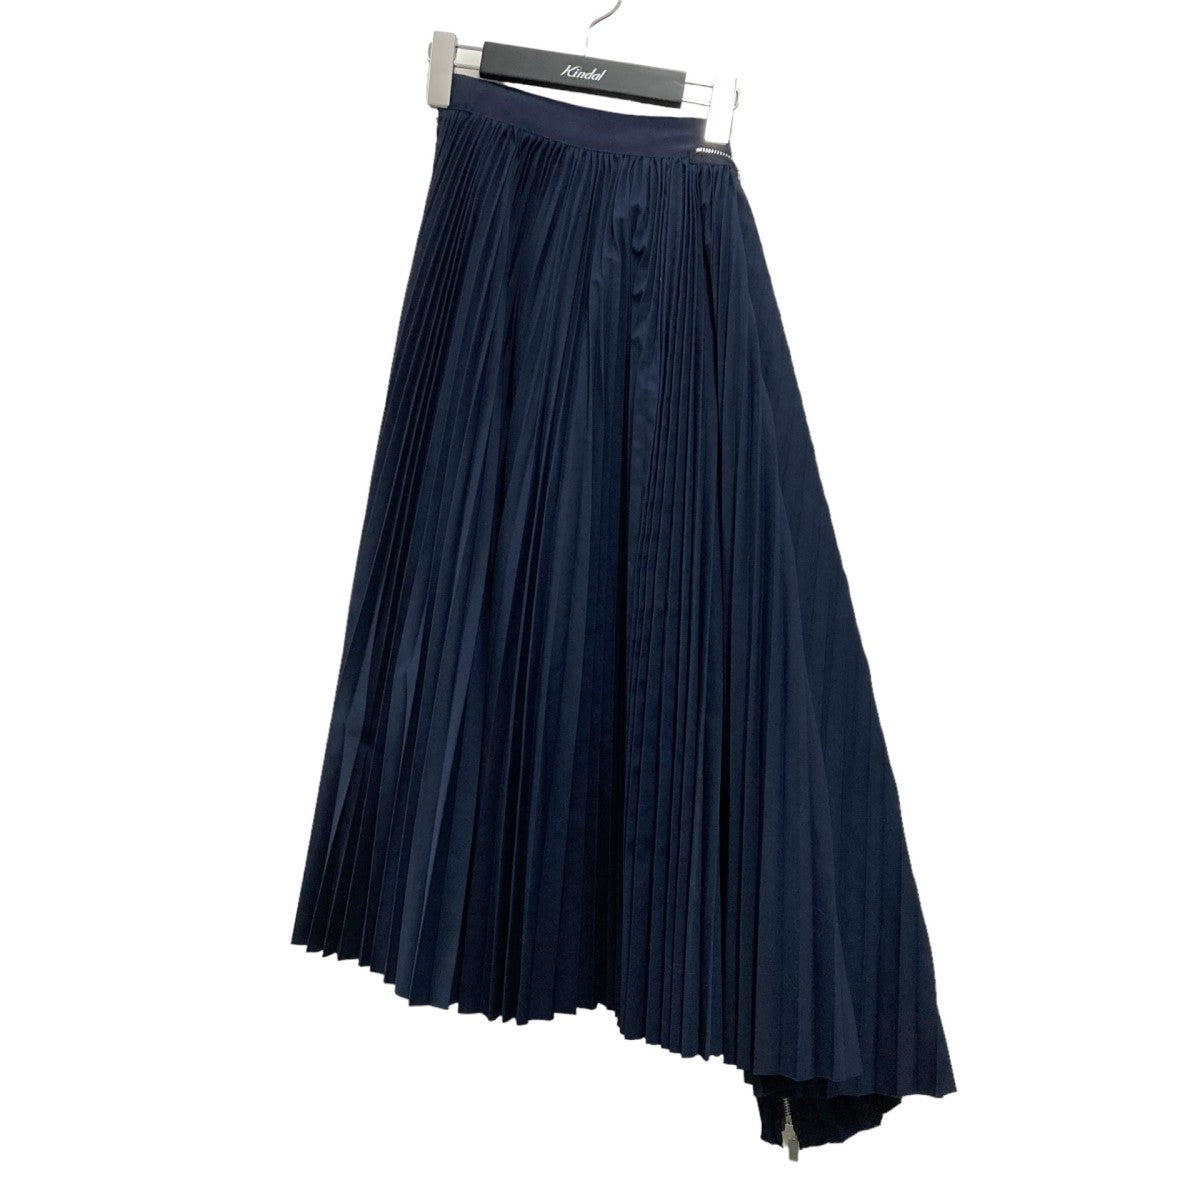 sacai(サカイ) Cotton Poplin Zipper Pleated Skirt SCW-057 20SS SCW 